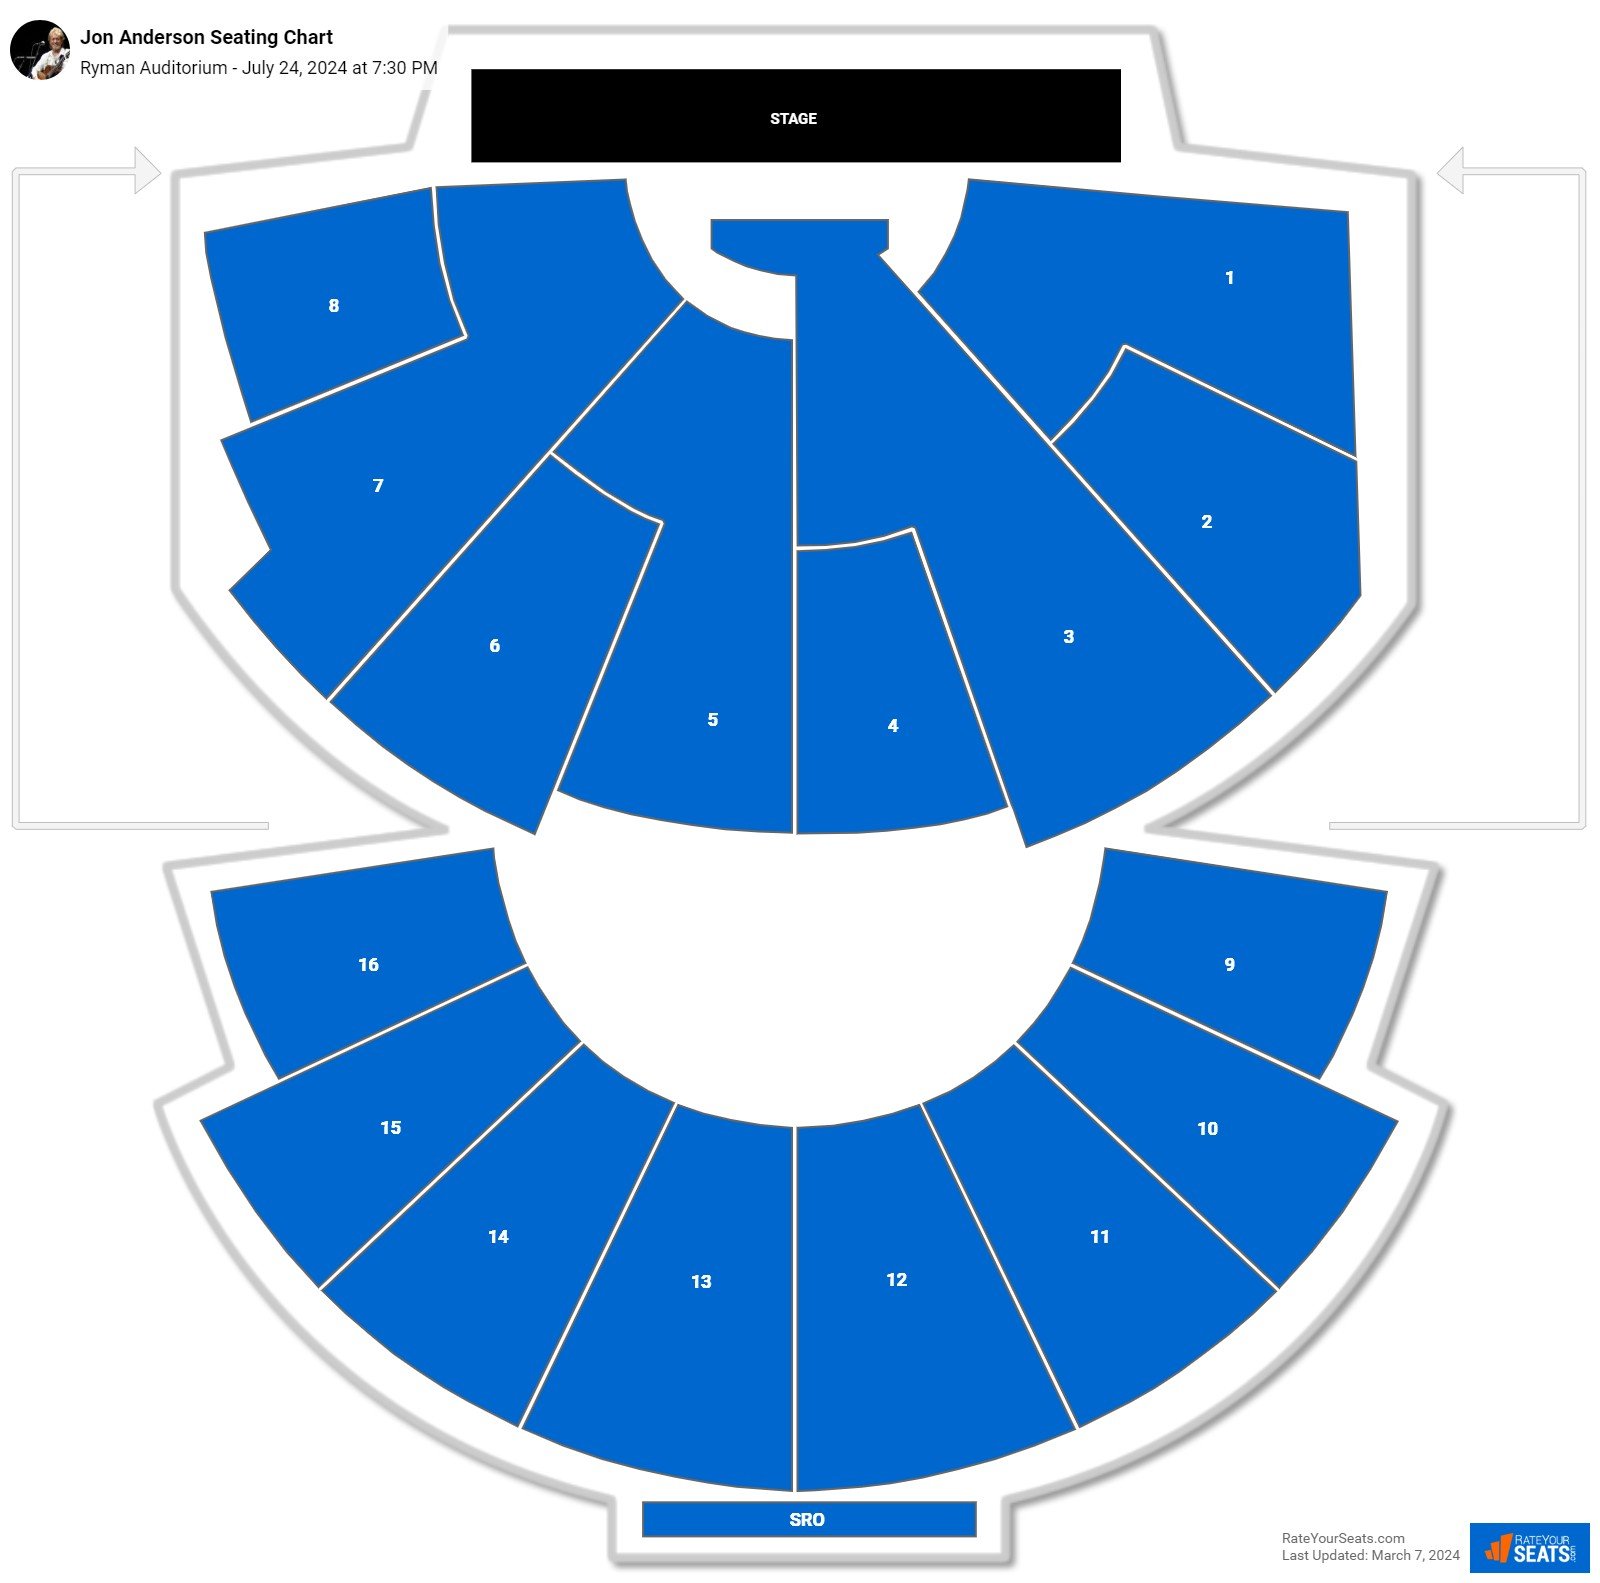 Jon Anderson seating chart Ryman Auditorium